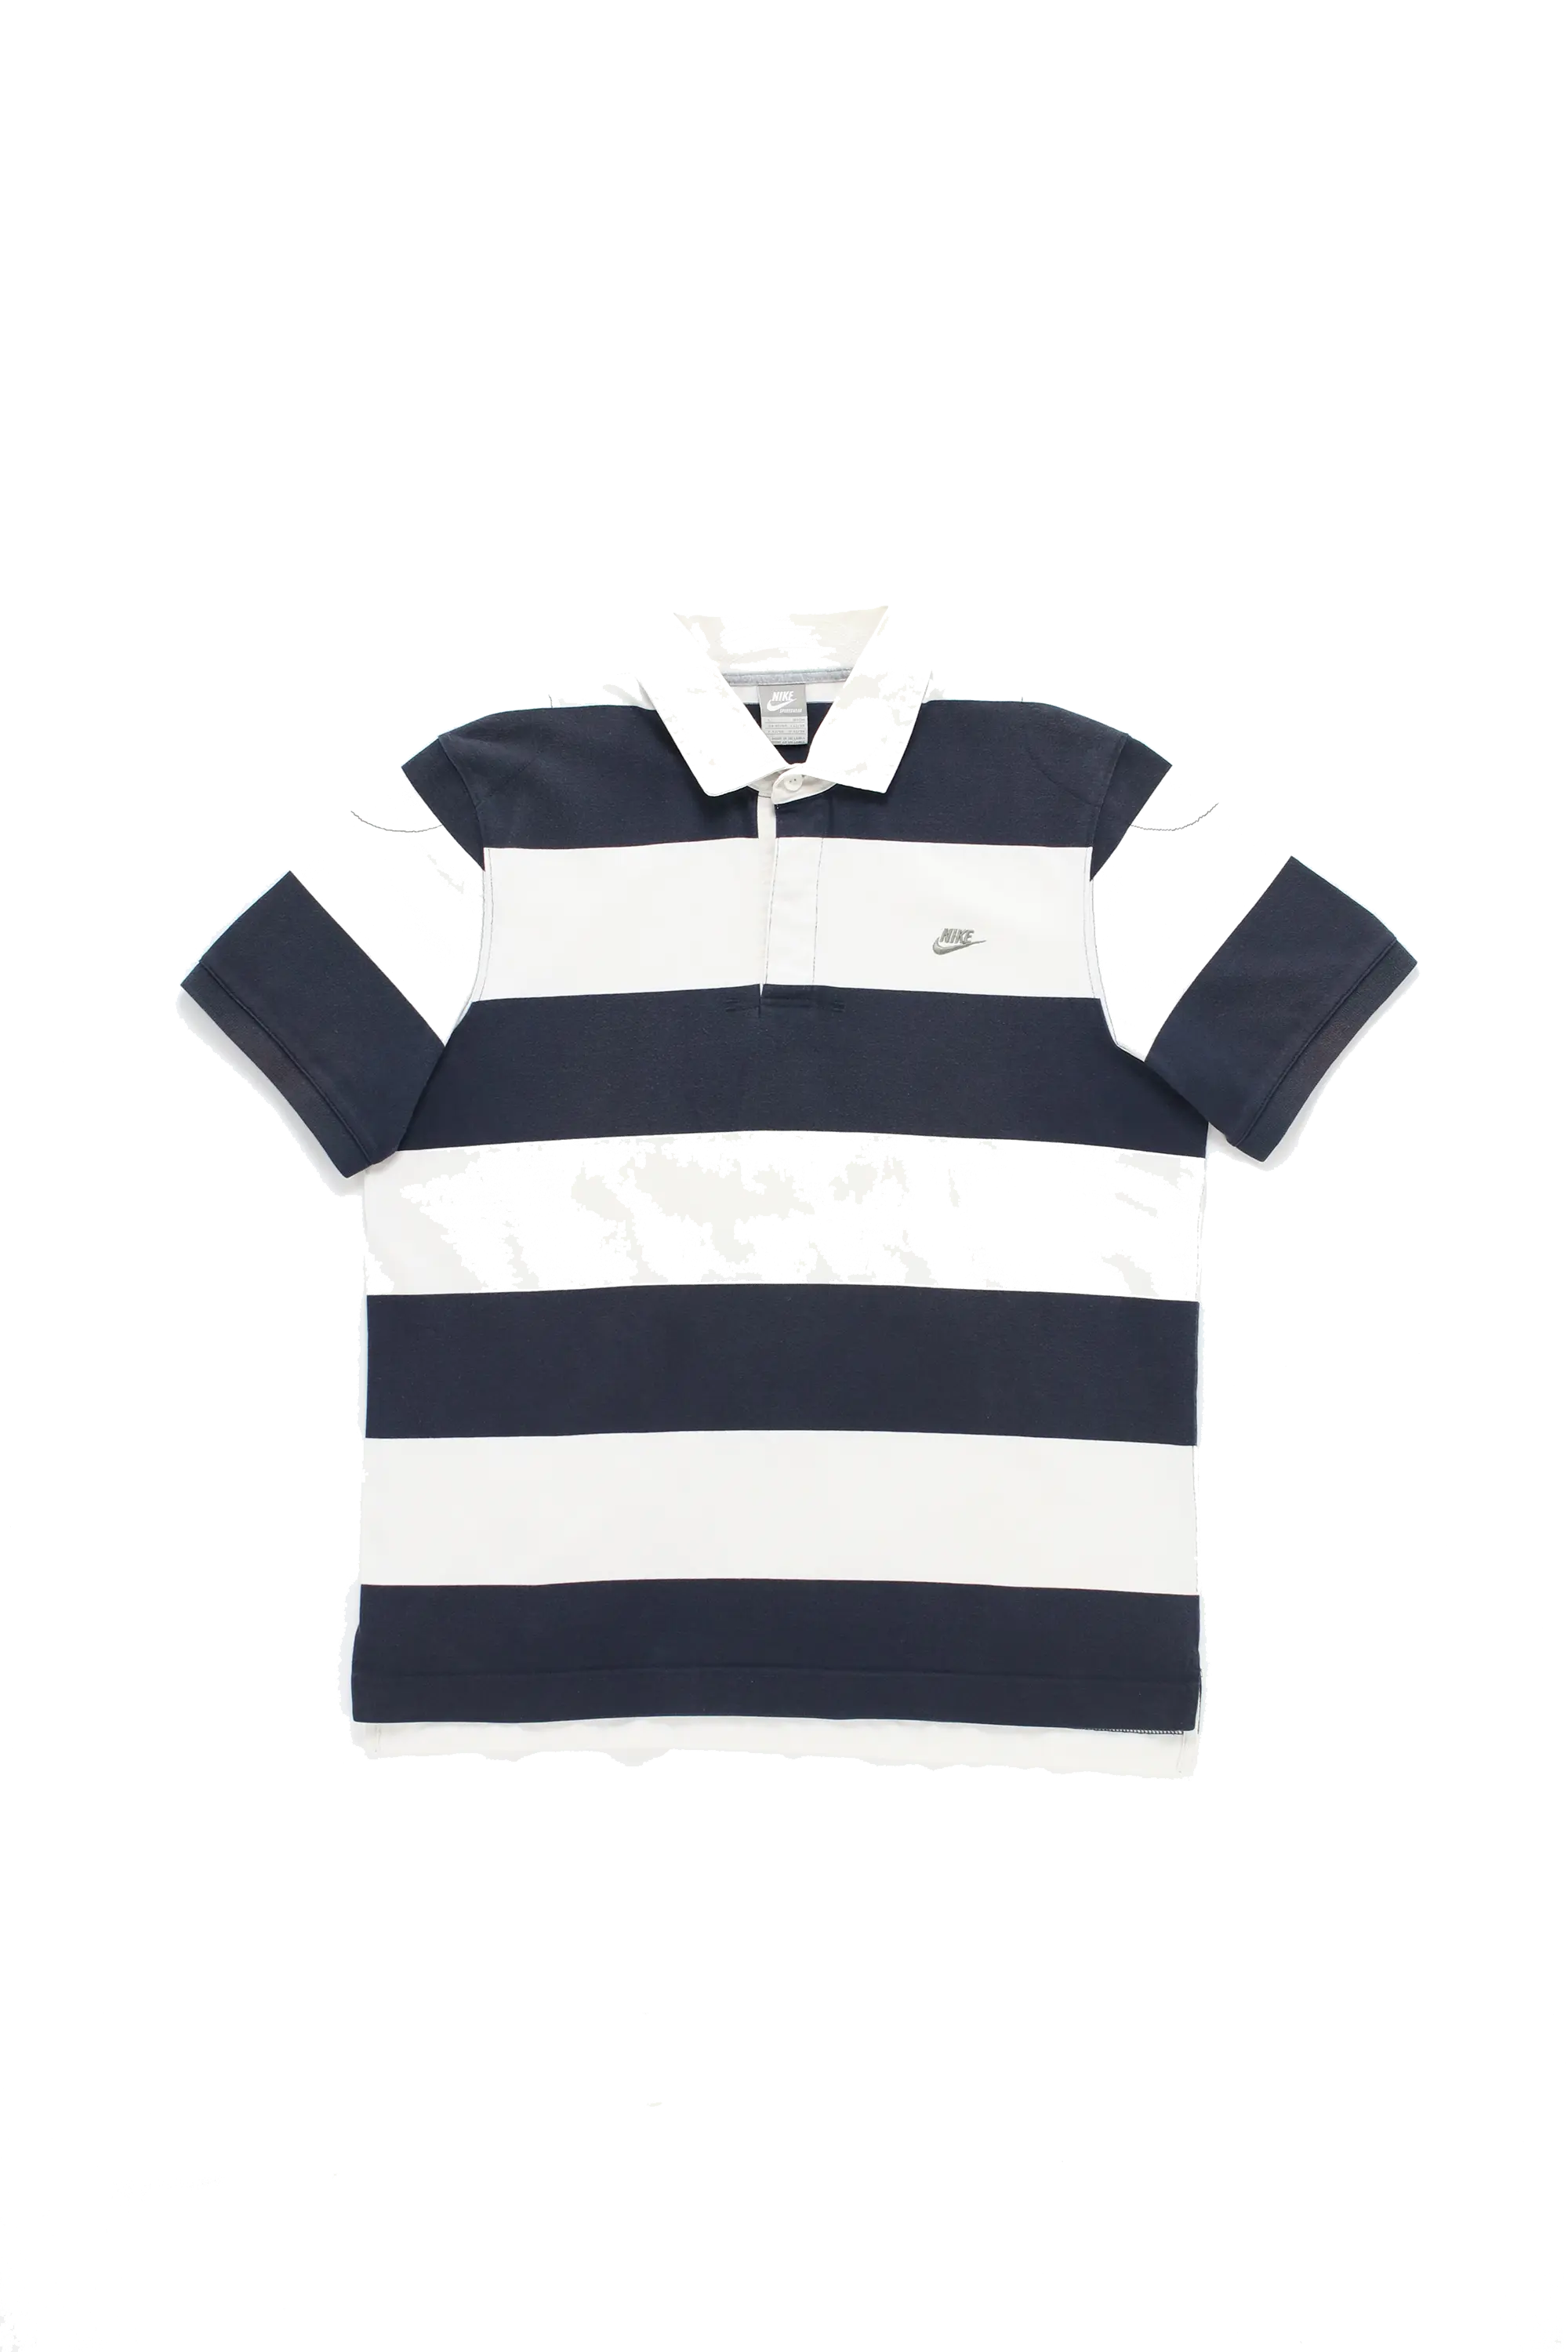 Nike Striped Polo Shirt